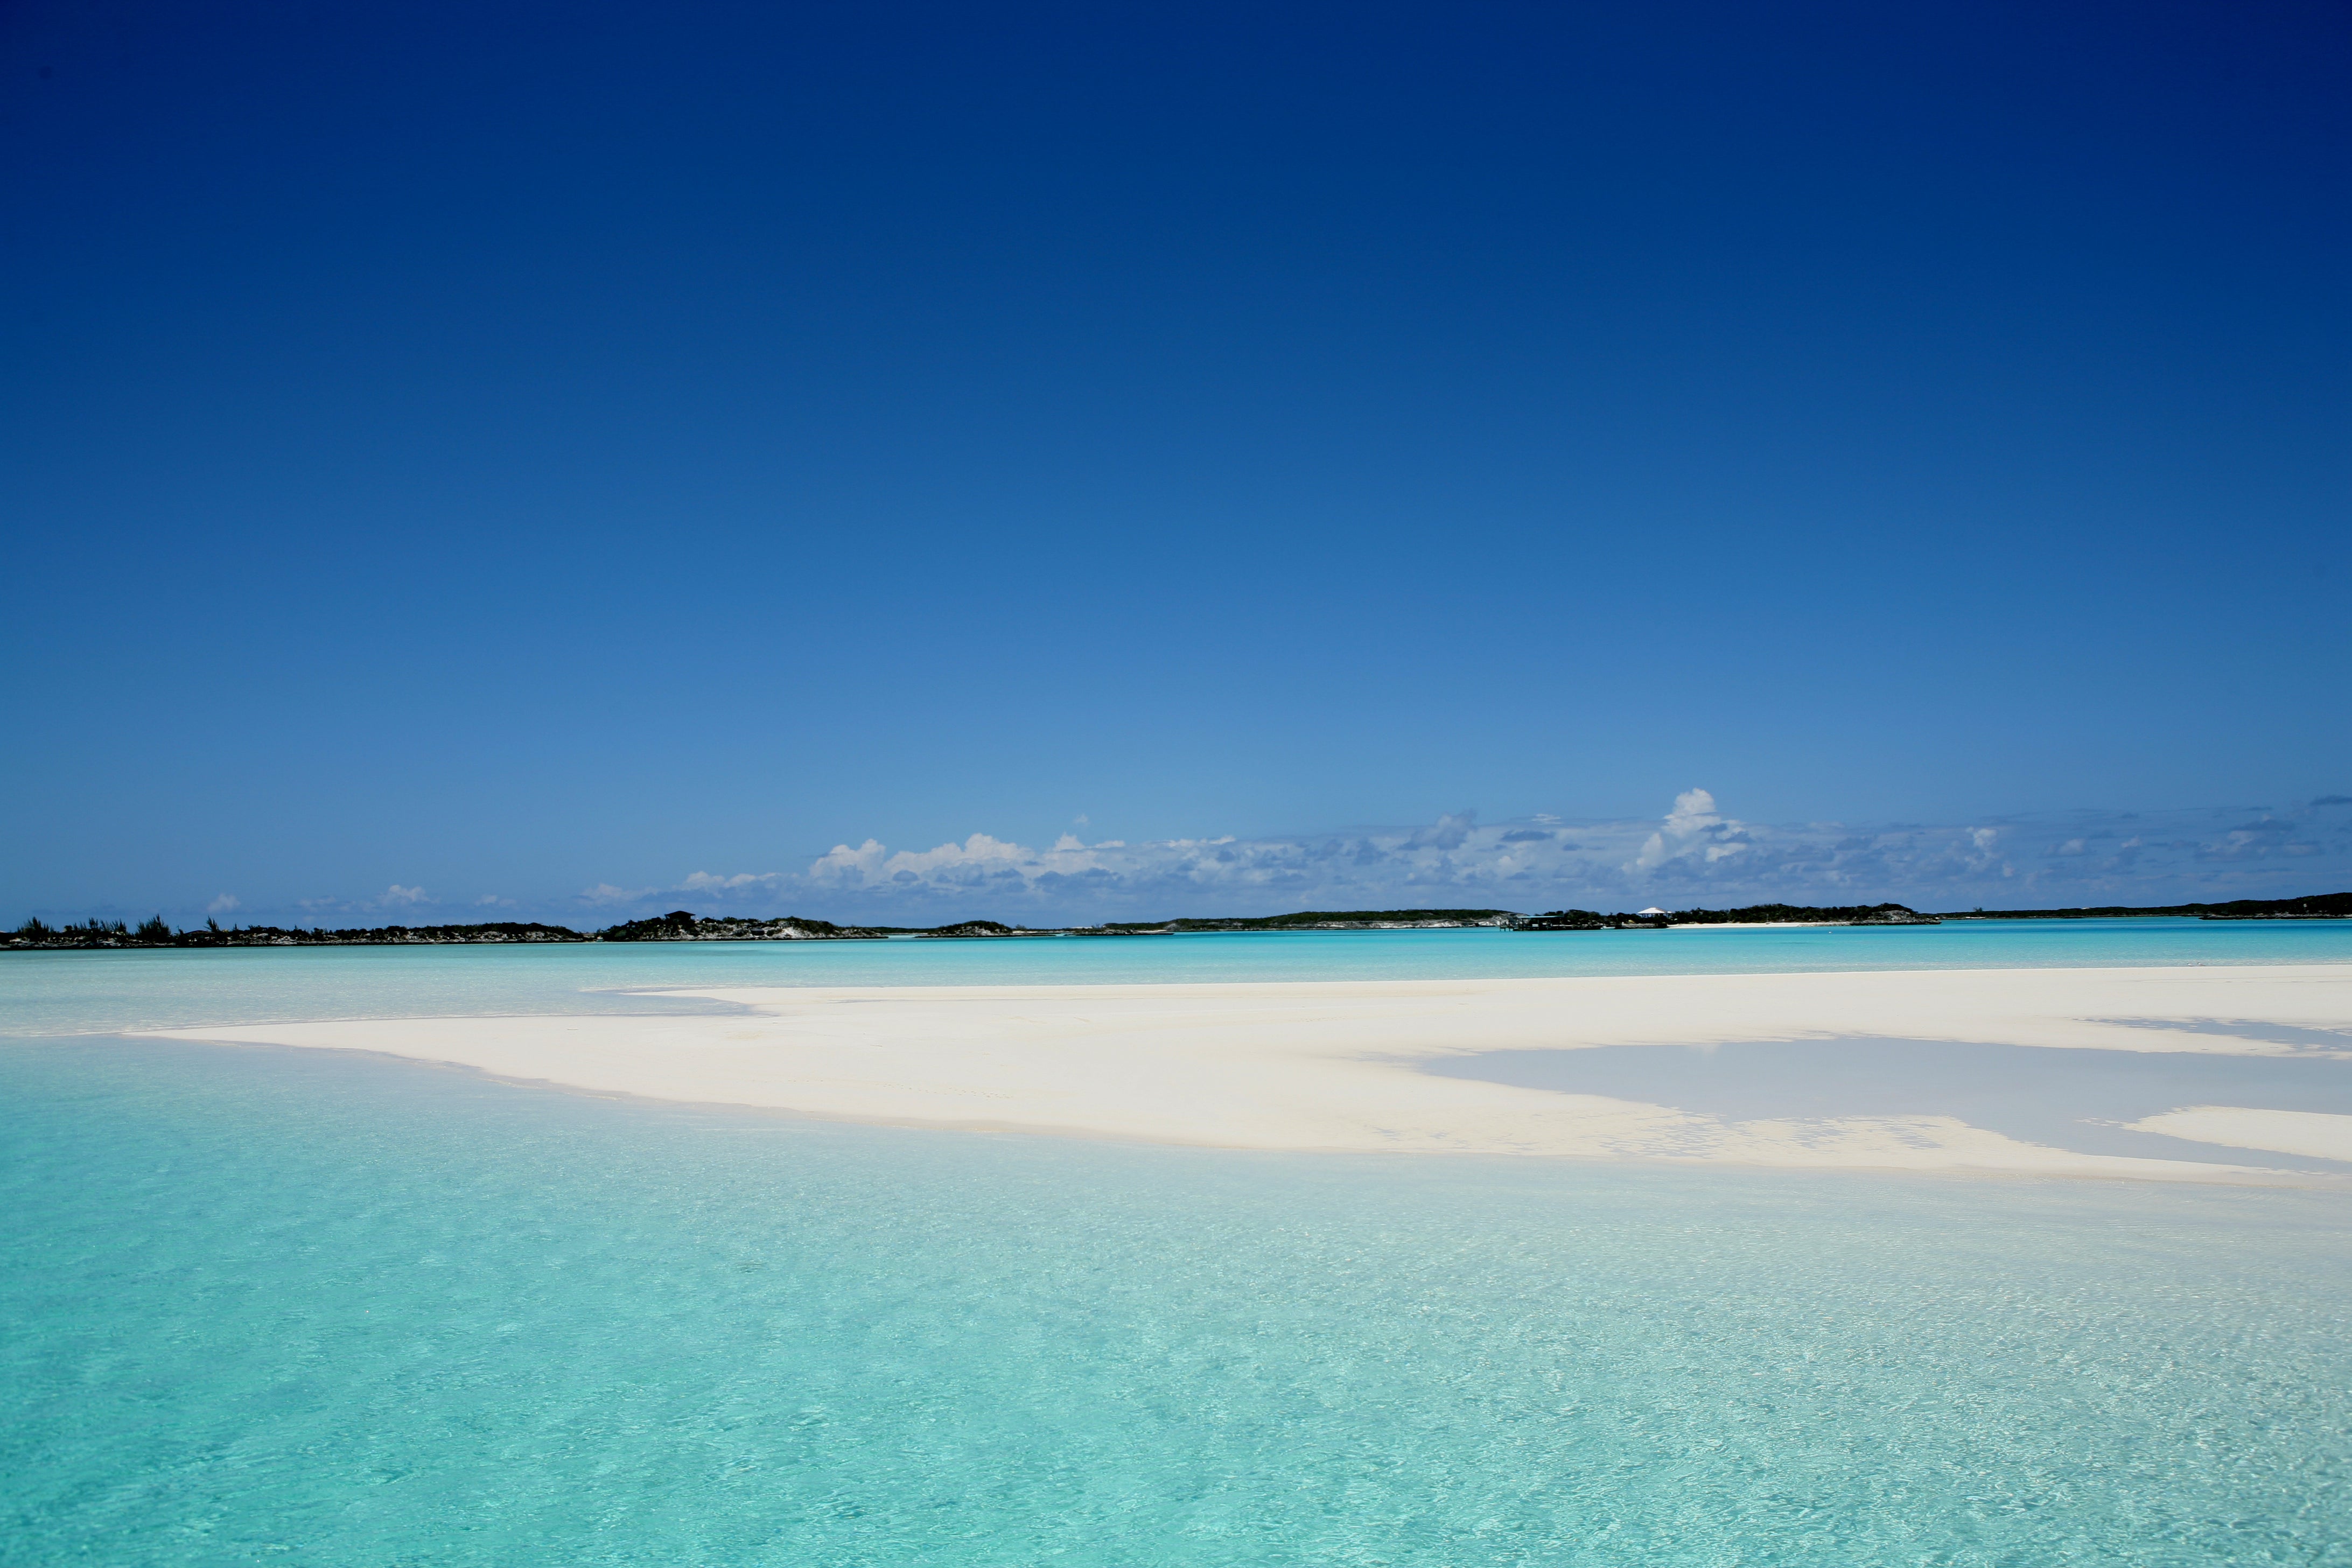 Sandbars and islands in the Bahamas